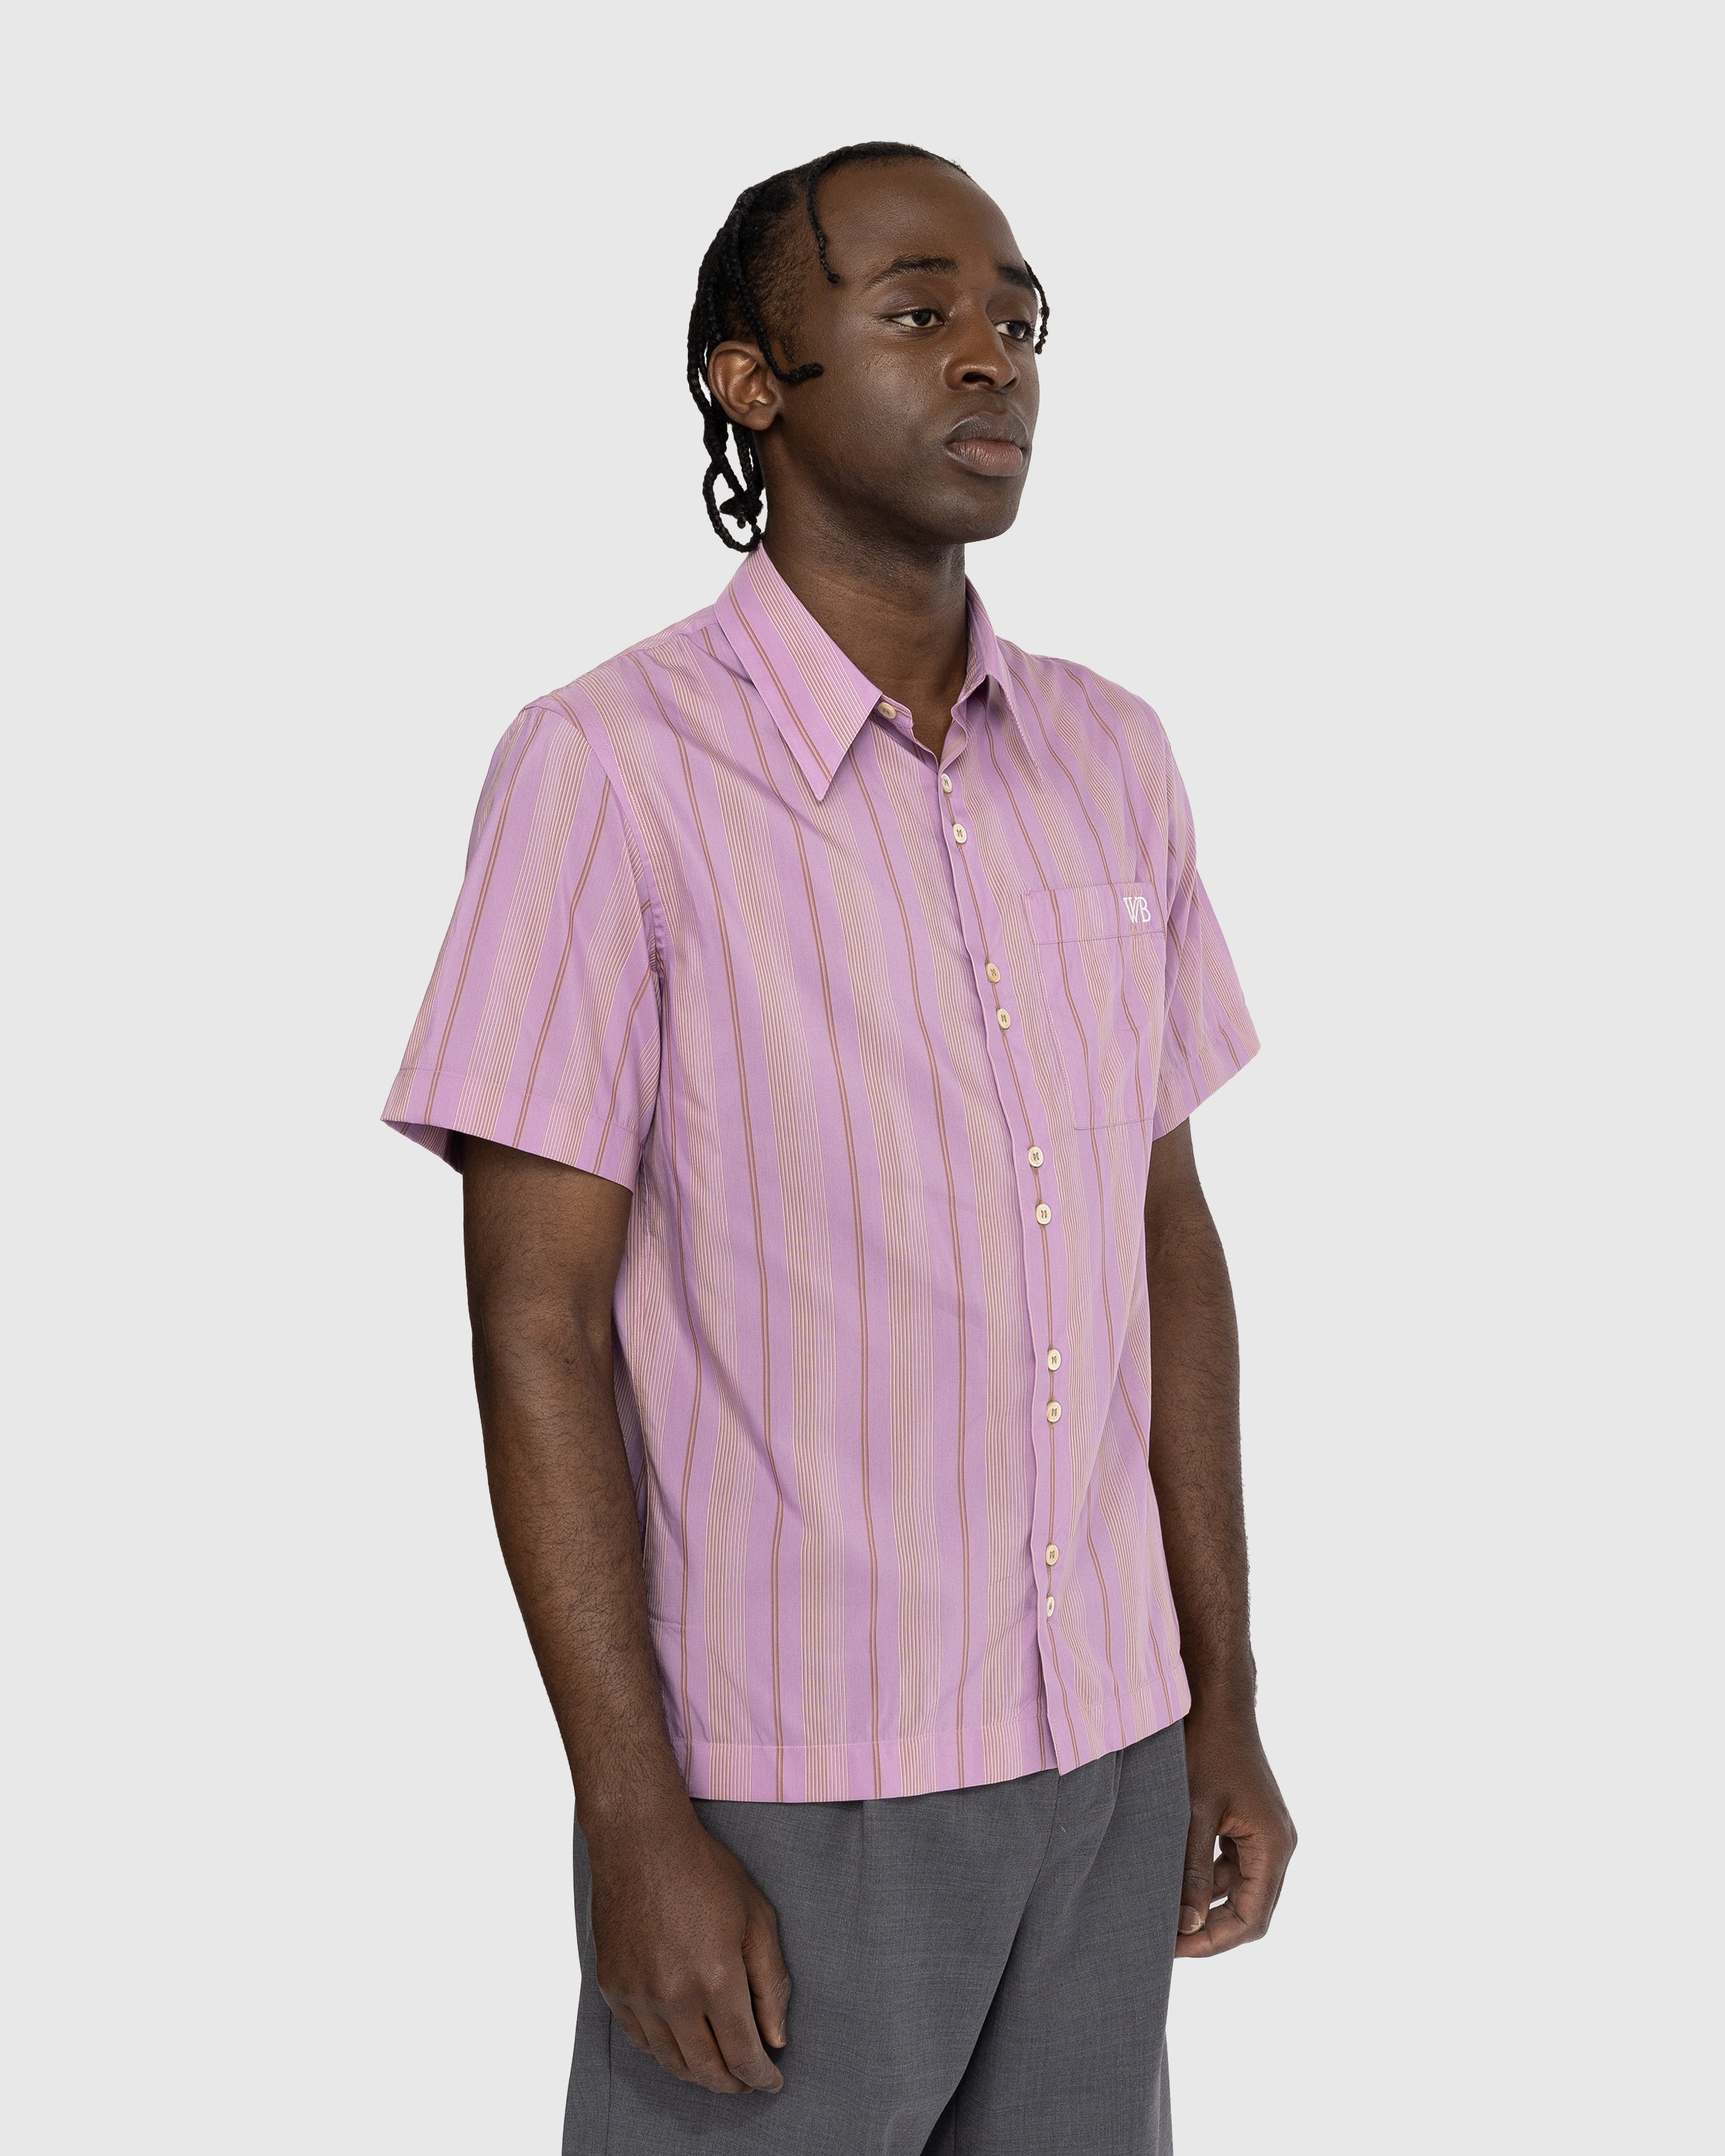 Wales Bonner - Rhythm Striped Shirt Pink - Clothing - Pink - Image 4